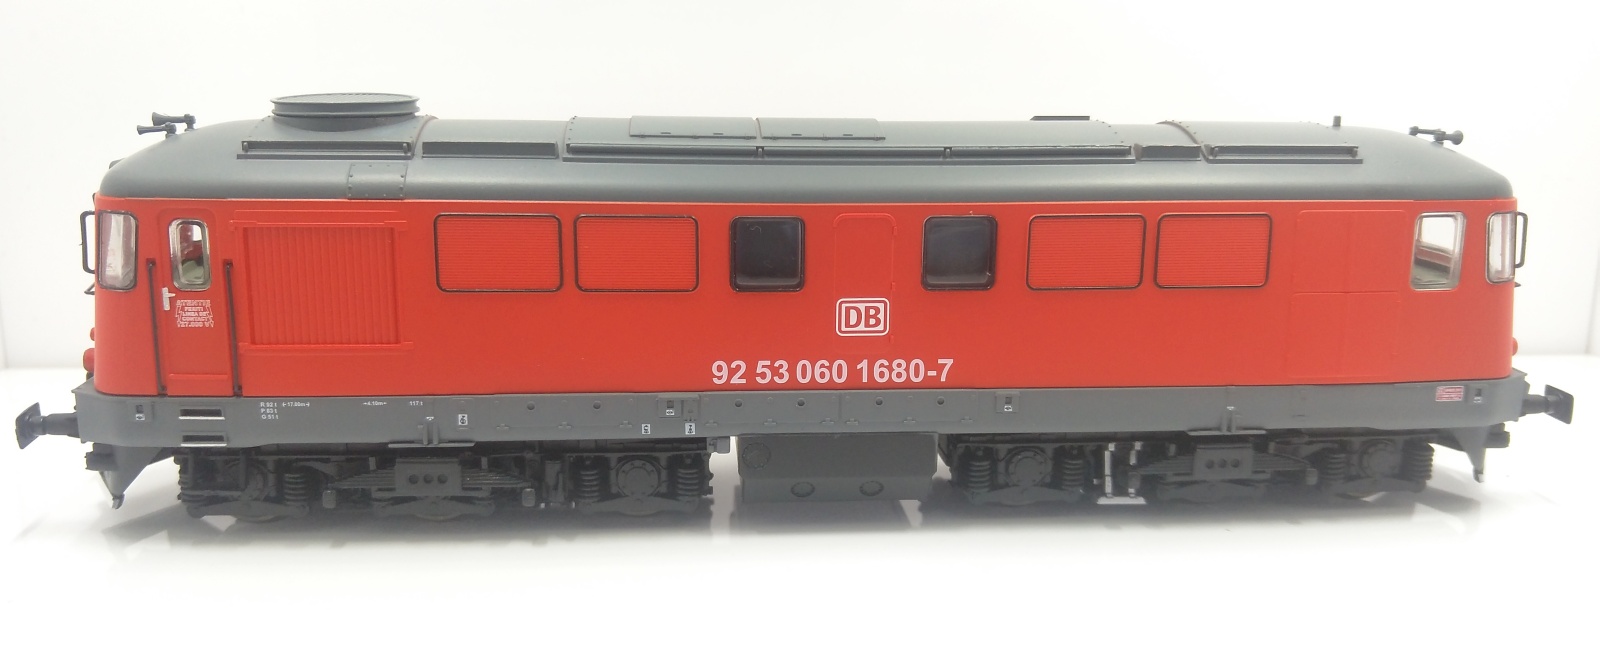 locomotiva-diesel-060-DA-DB-Schenker-Ro-albert-modell-060001-f.jpg